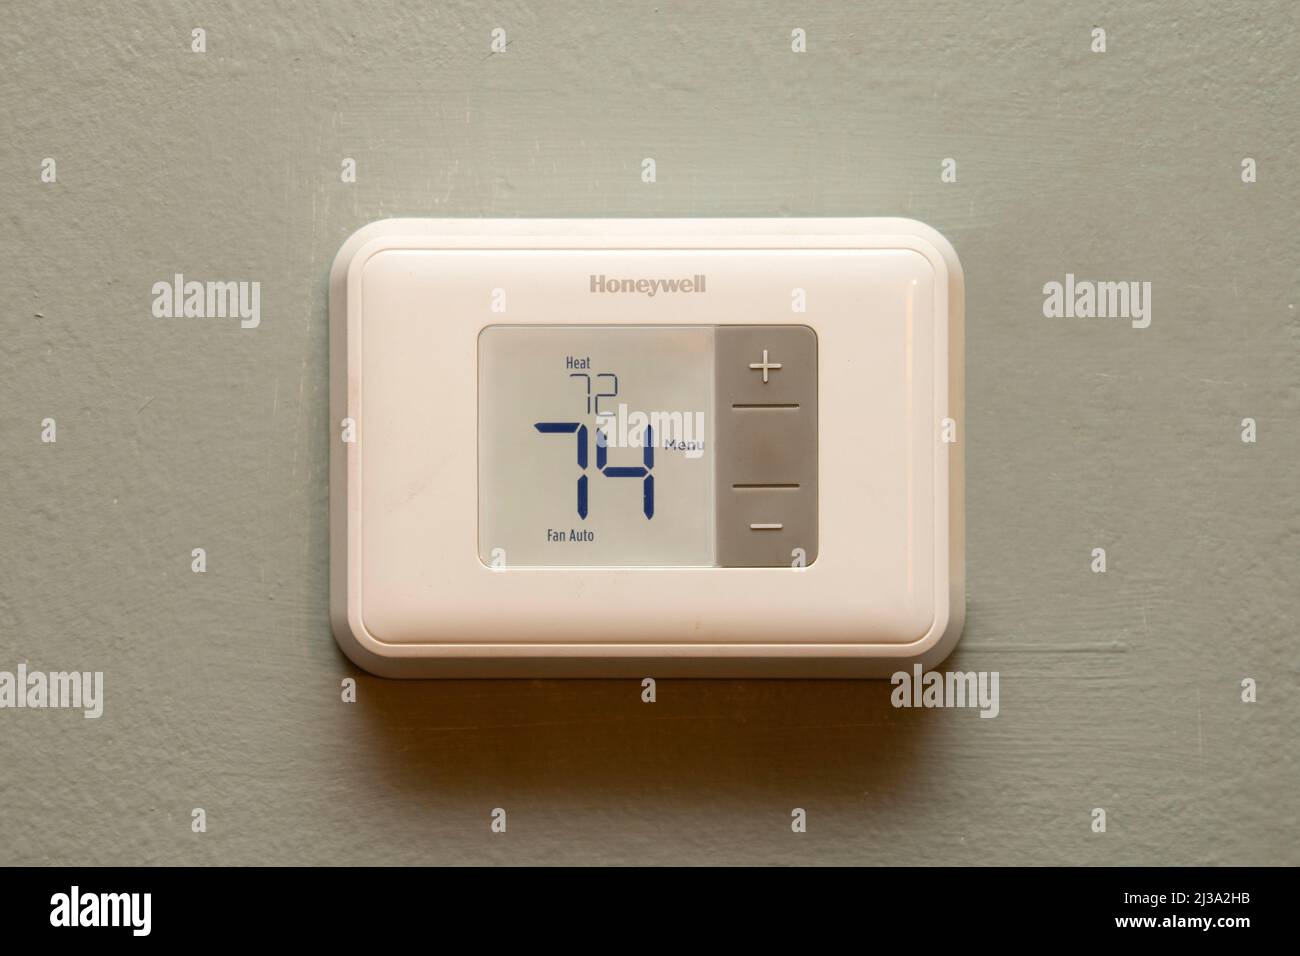 Honeywell Digital Wall Thermostat Stock Photo